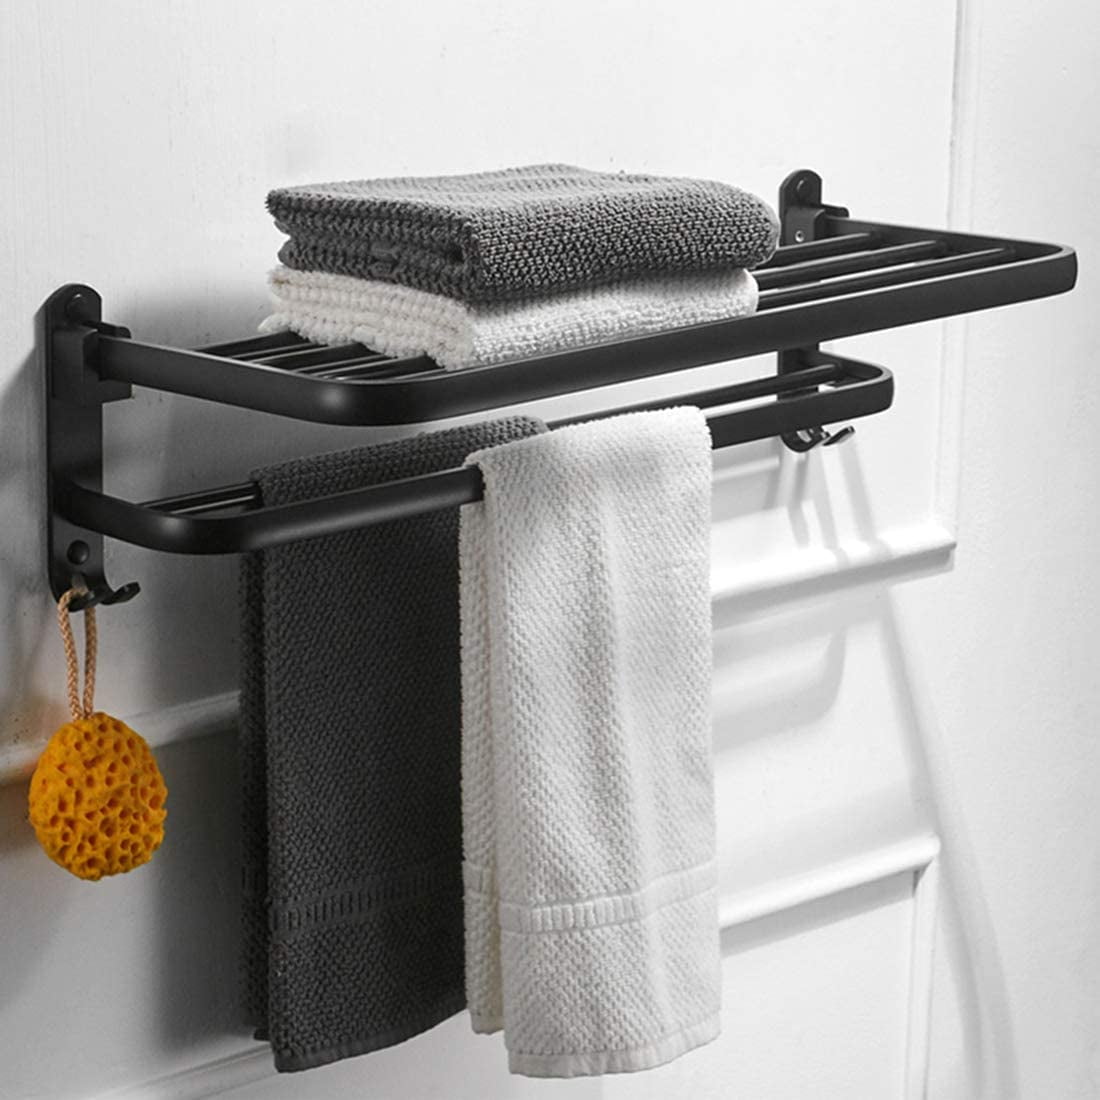 Novashion Towel Racks Bar 24in, Towel Racks For Bathroom Wall Mounted